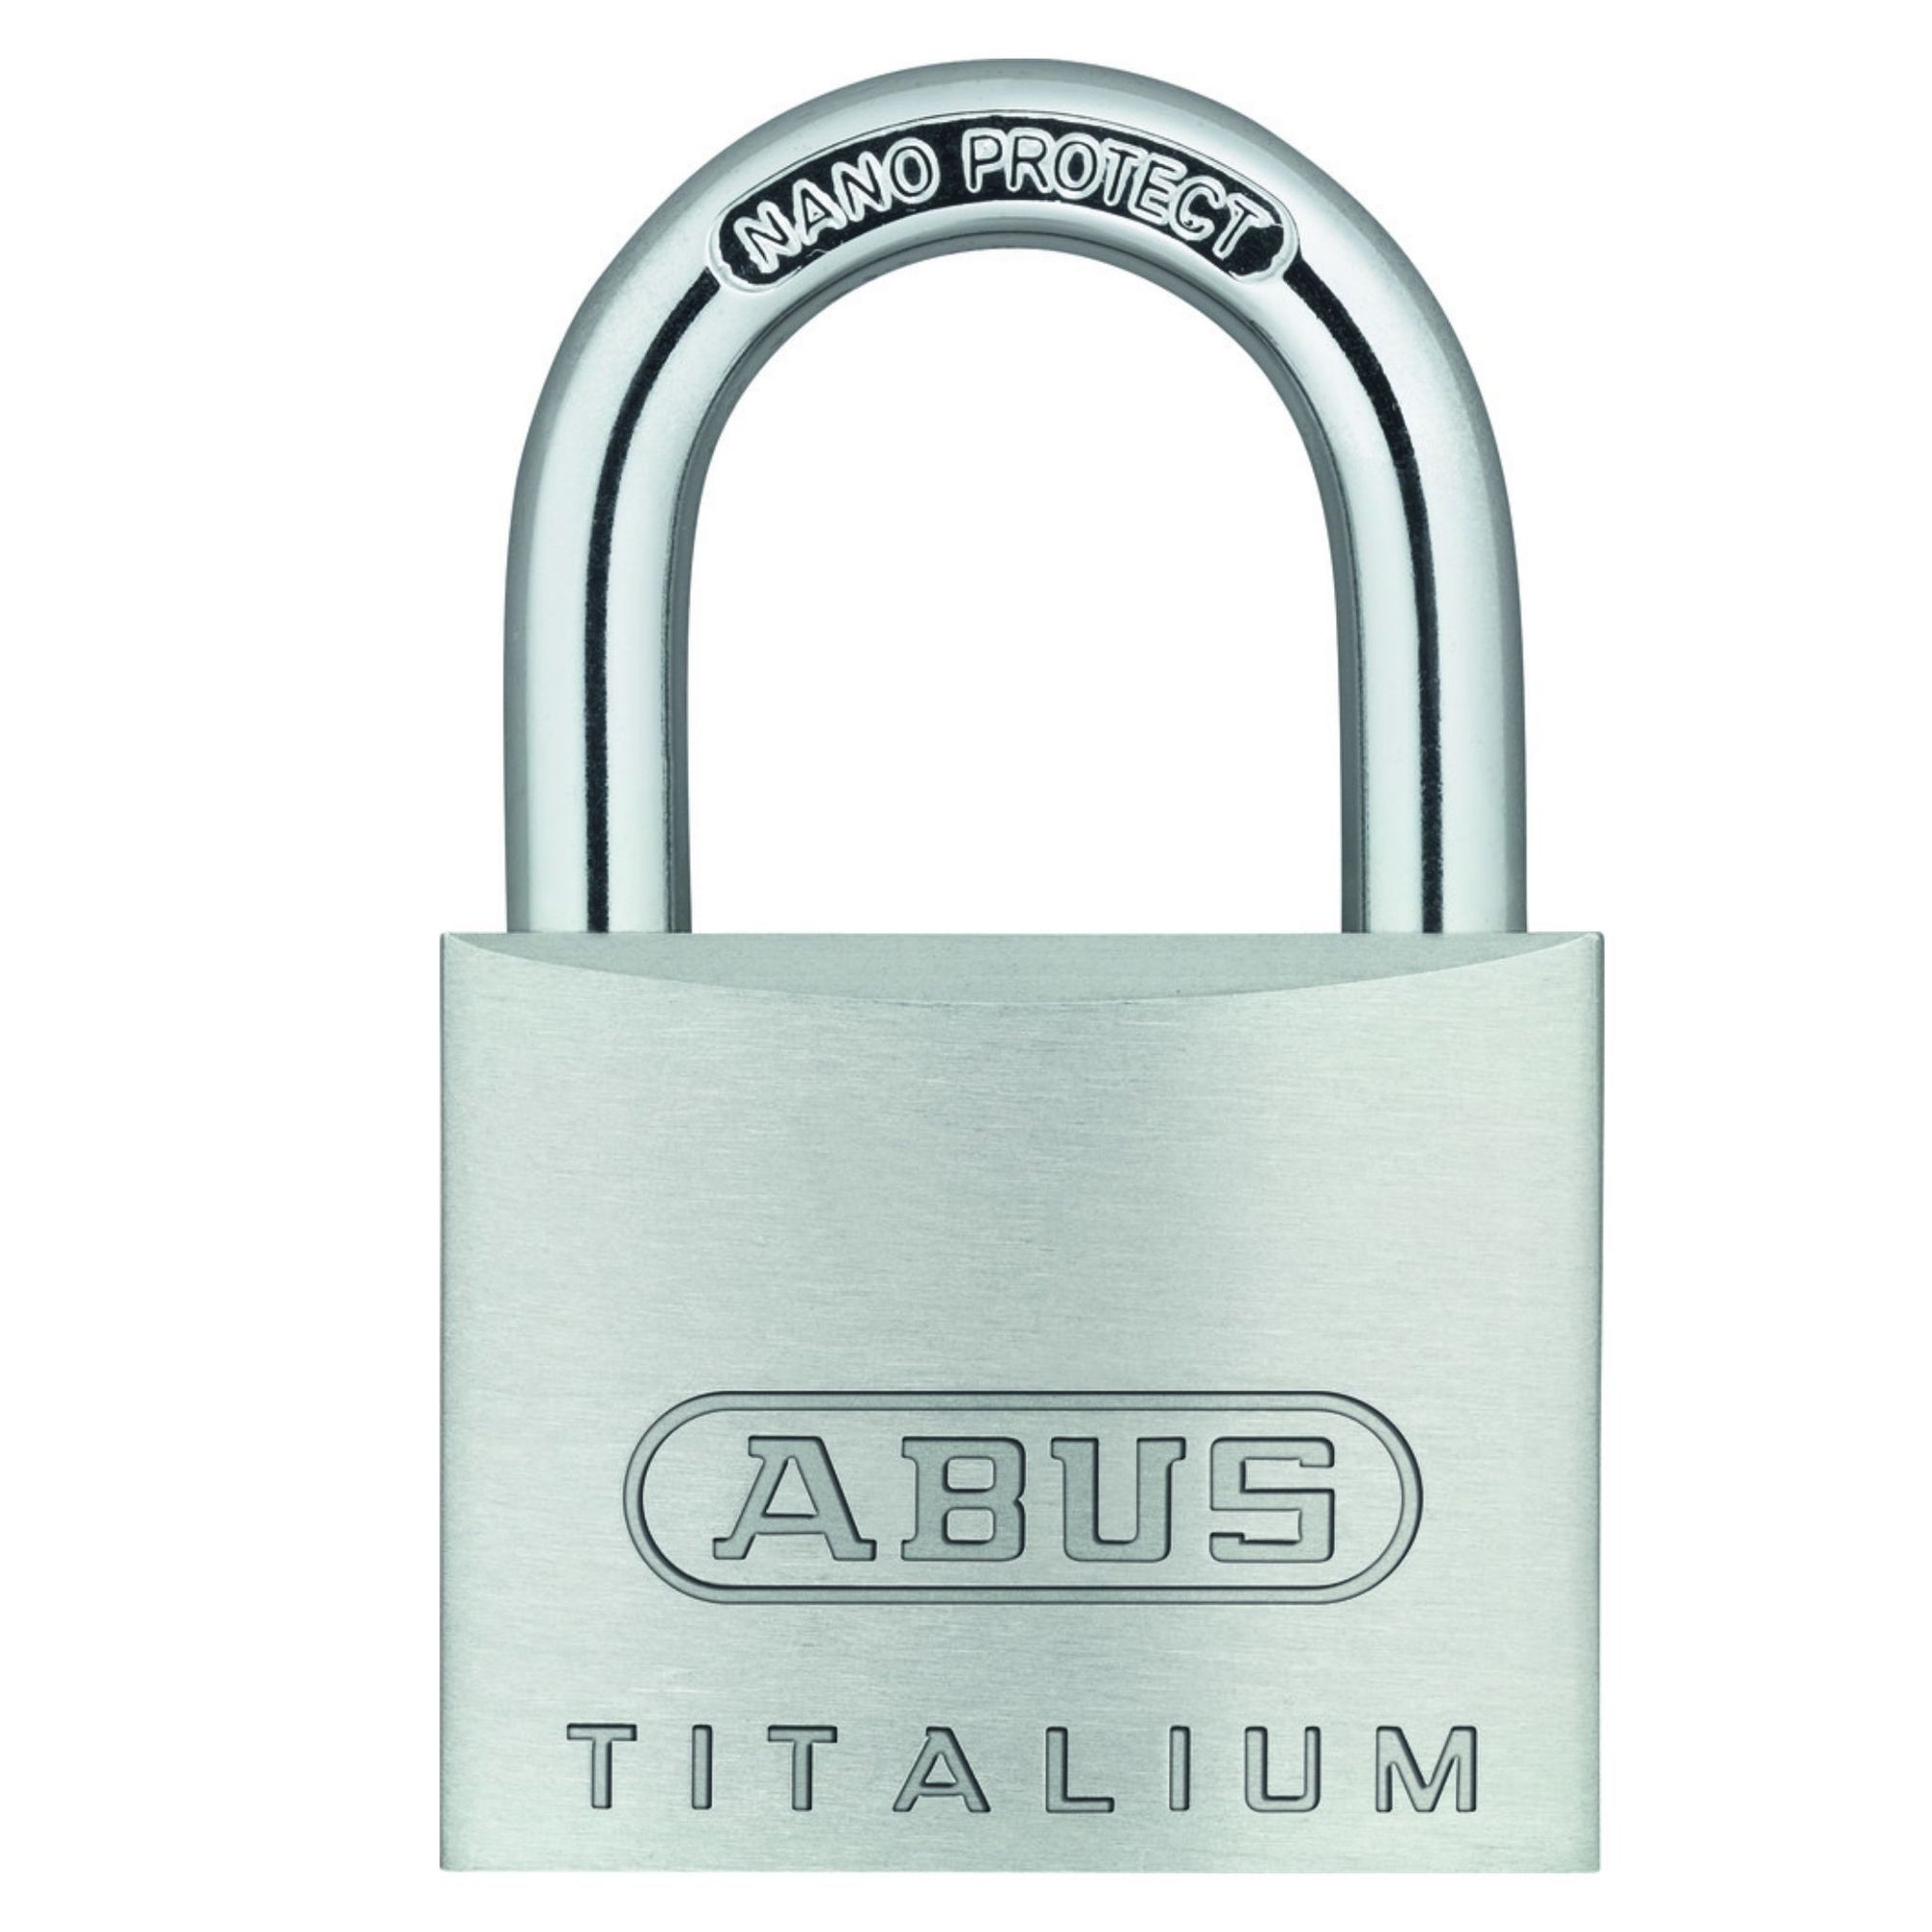 Abus 64TI/40 C KD Lock Keyed Different Titalium Padlocks Carded for Retail Display - The Lock Source